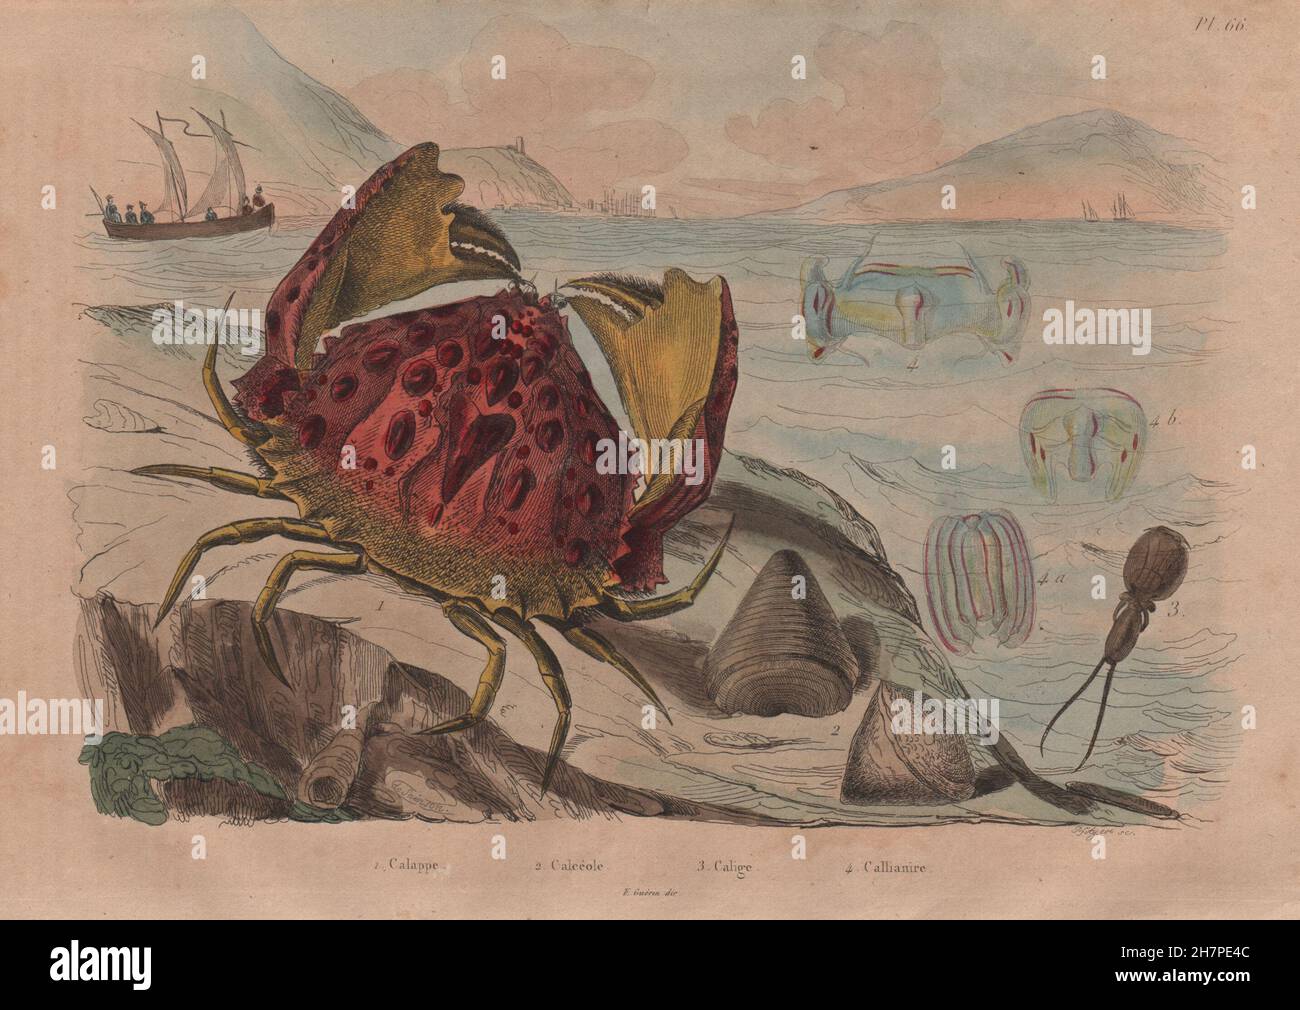 Calappa (box/shame-faced crab). Calceola coral. Calige. Callianira jellies, 1833 Stock Photo